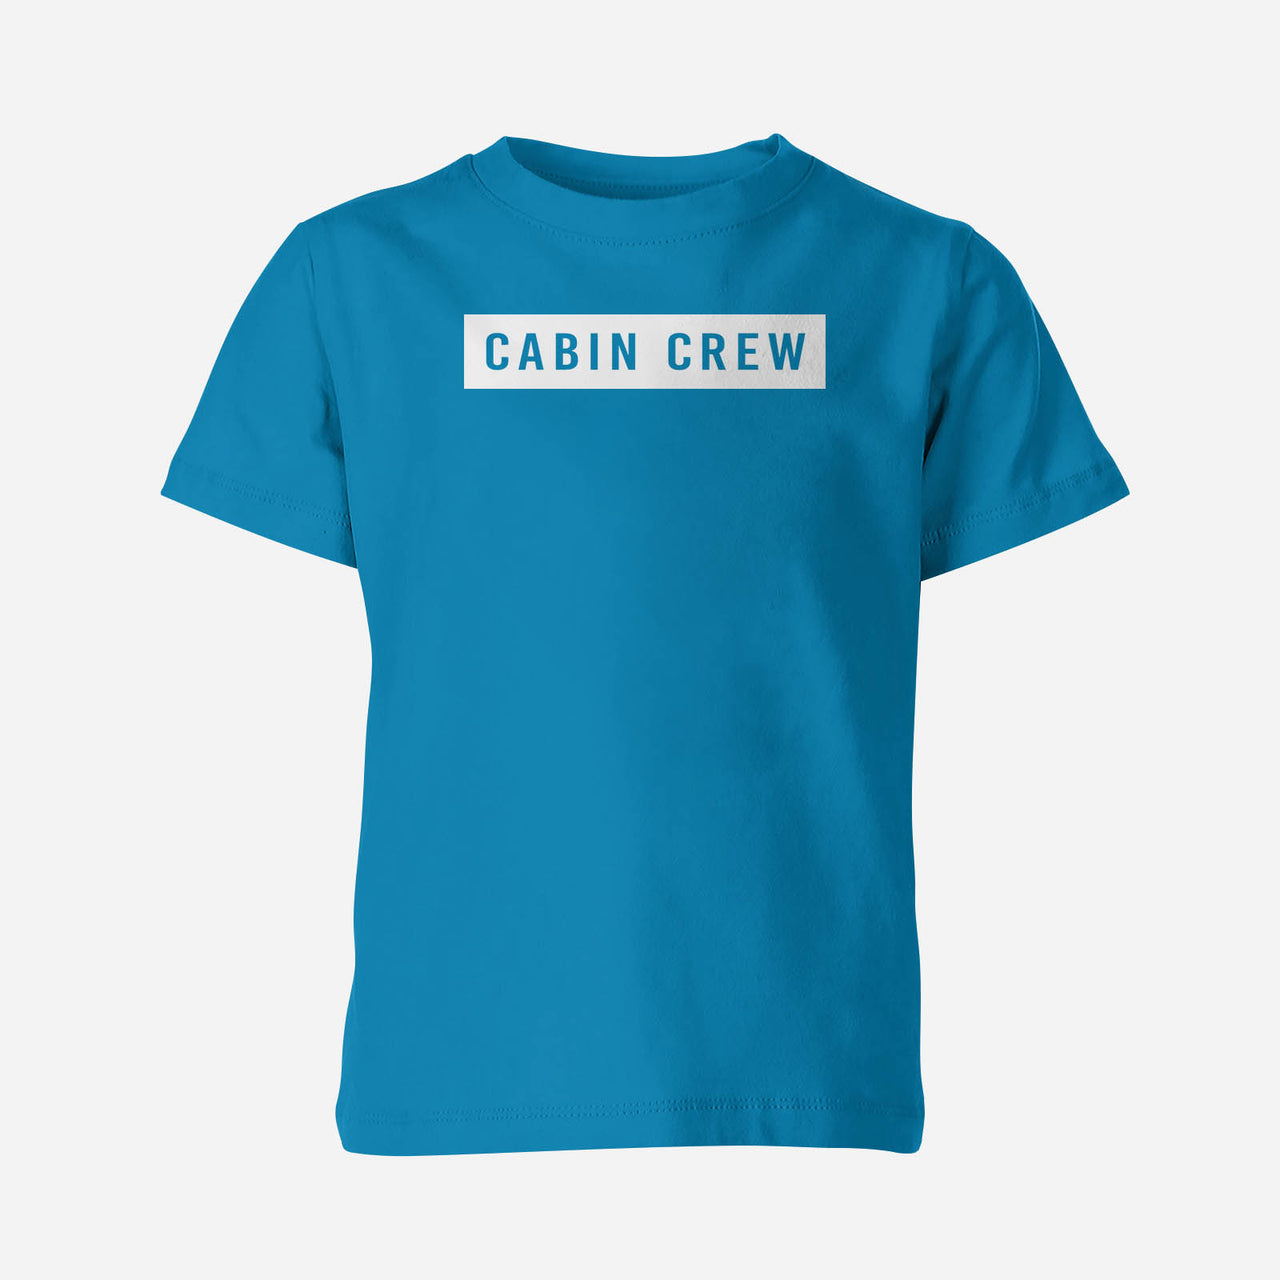 Cabin Crew Text Designed Children T-Shirts